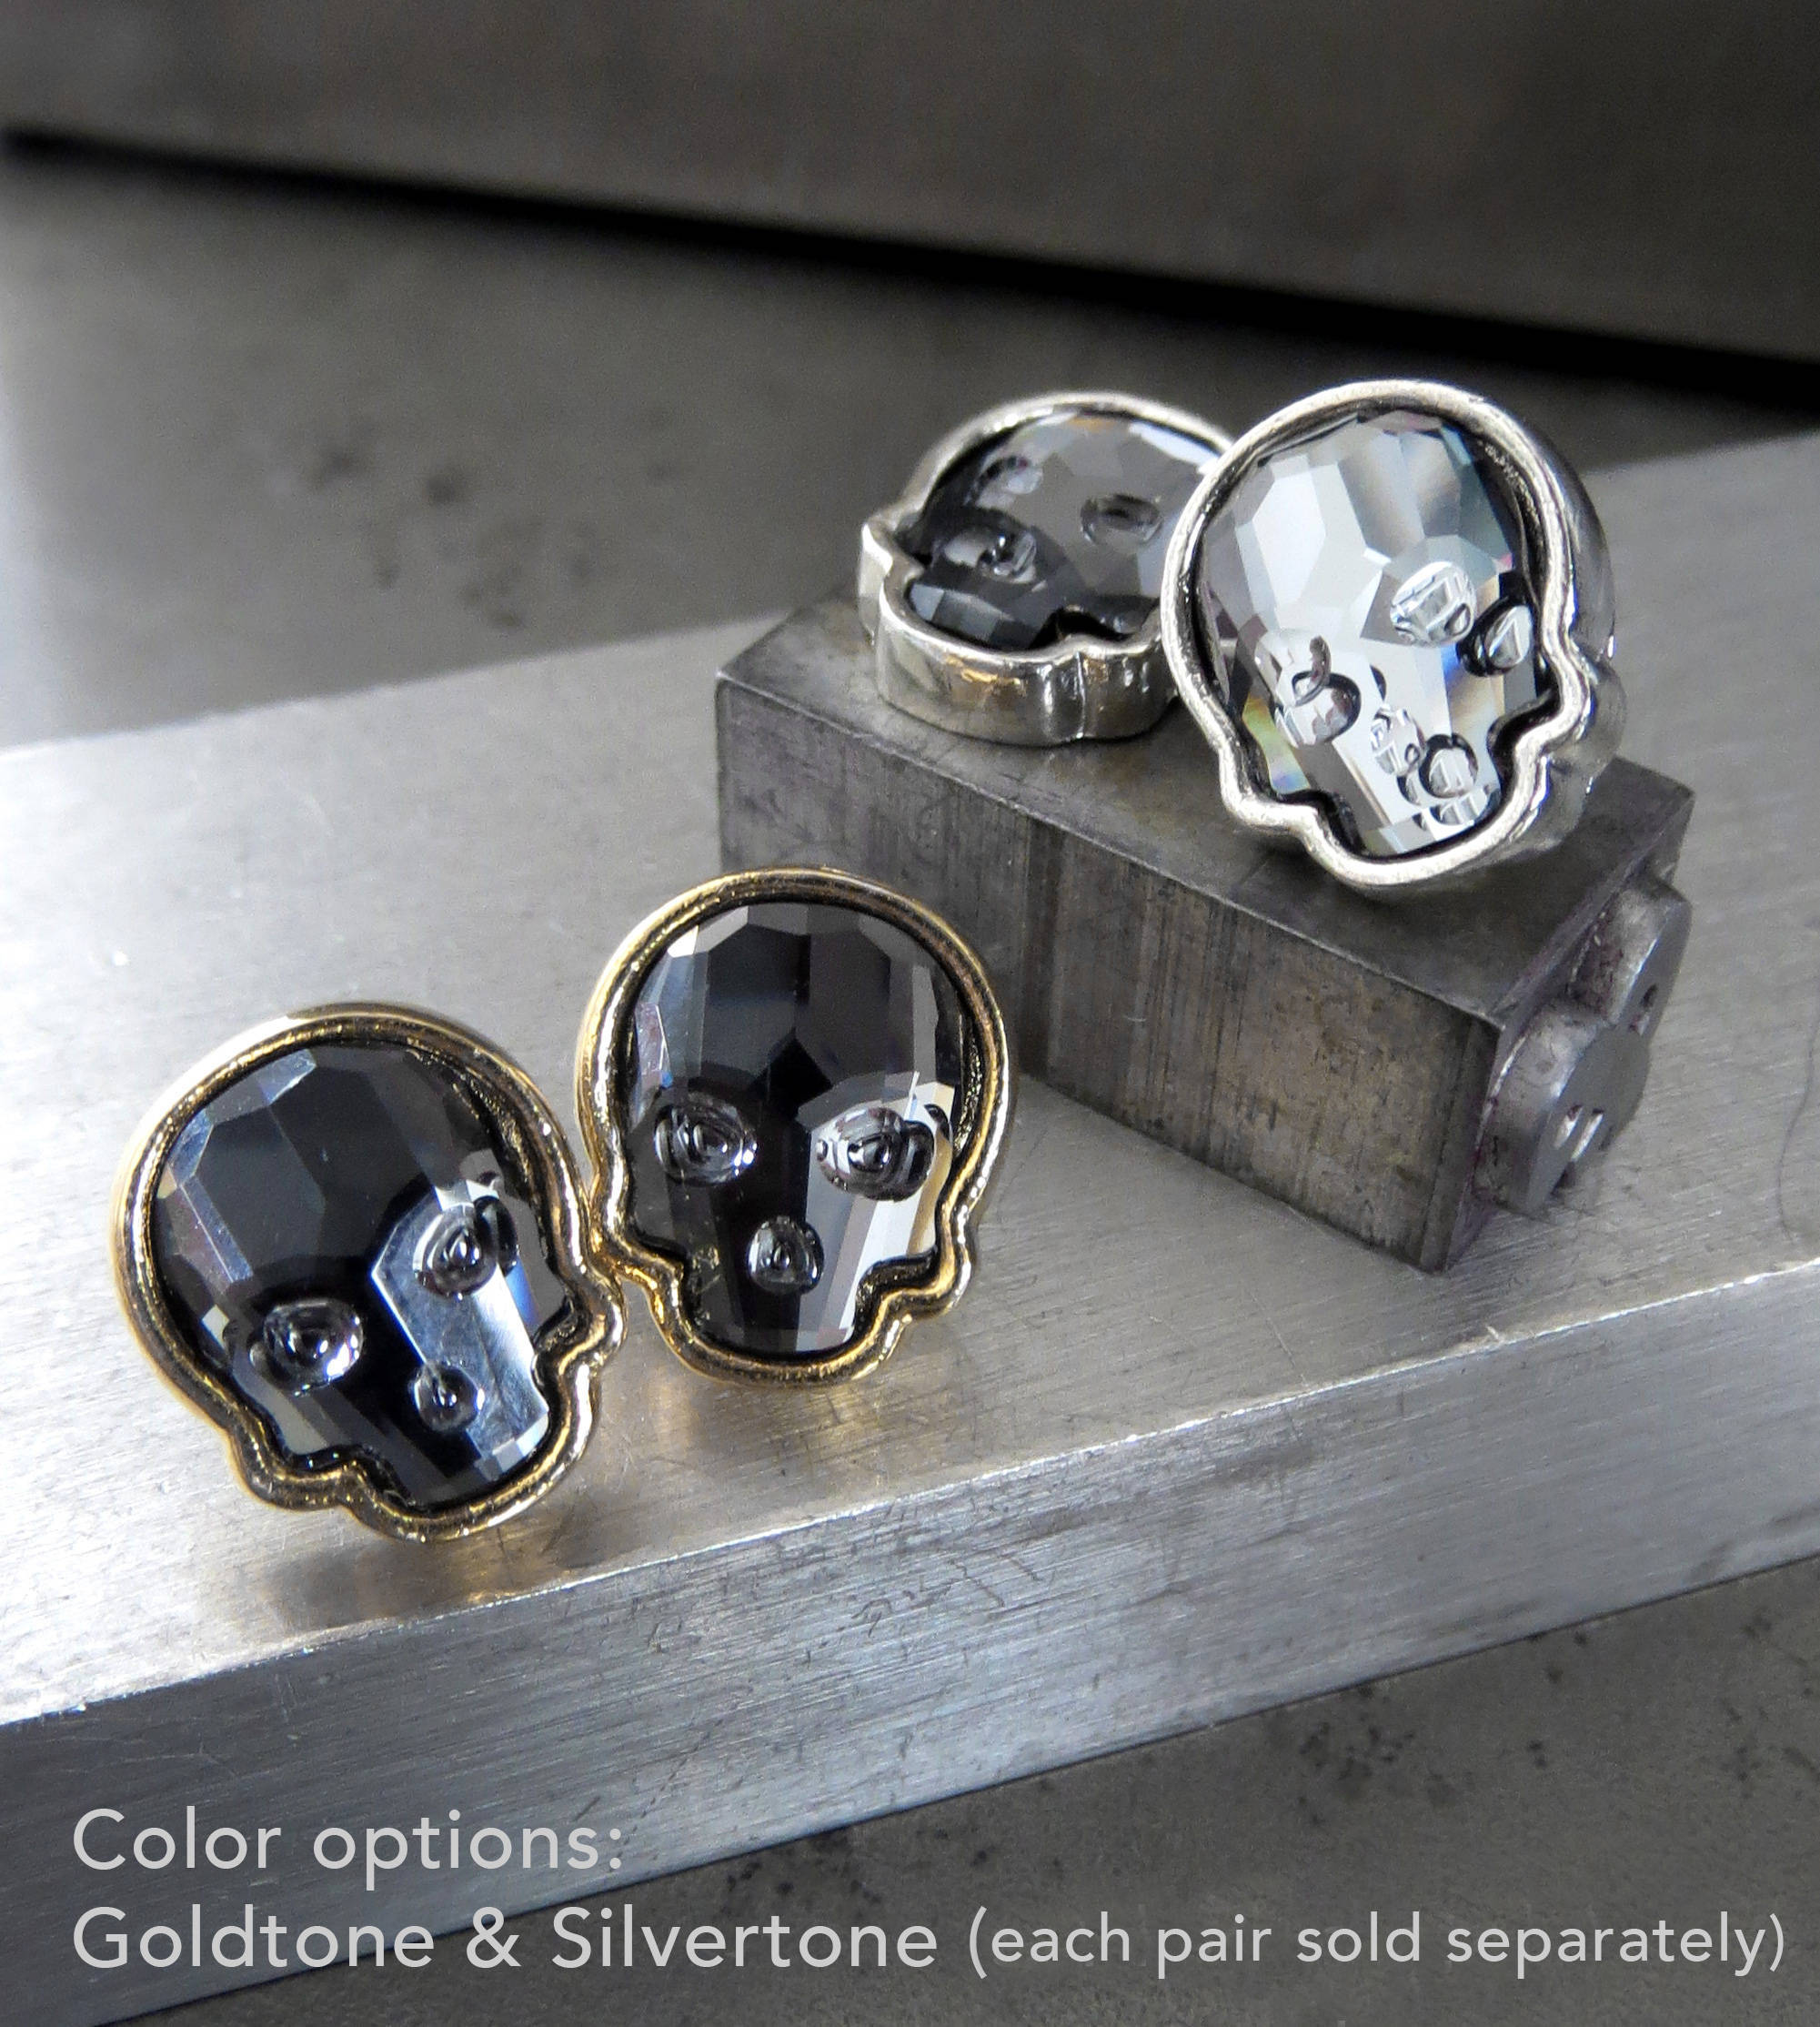 Crystal Skull Stud Earrings - Midnight Black with Silver